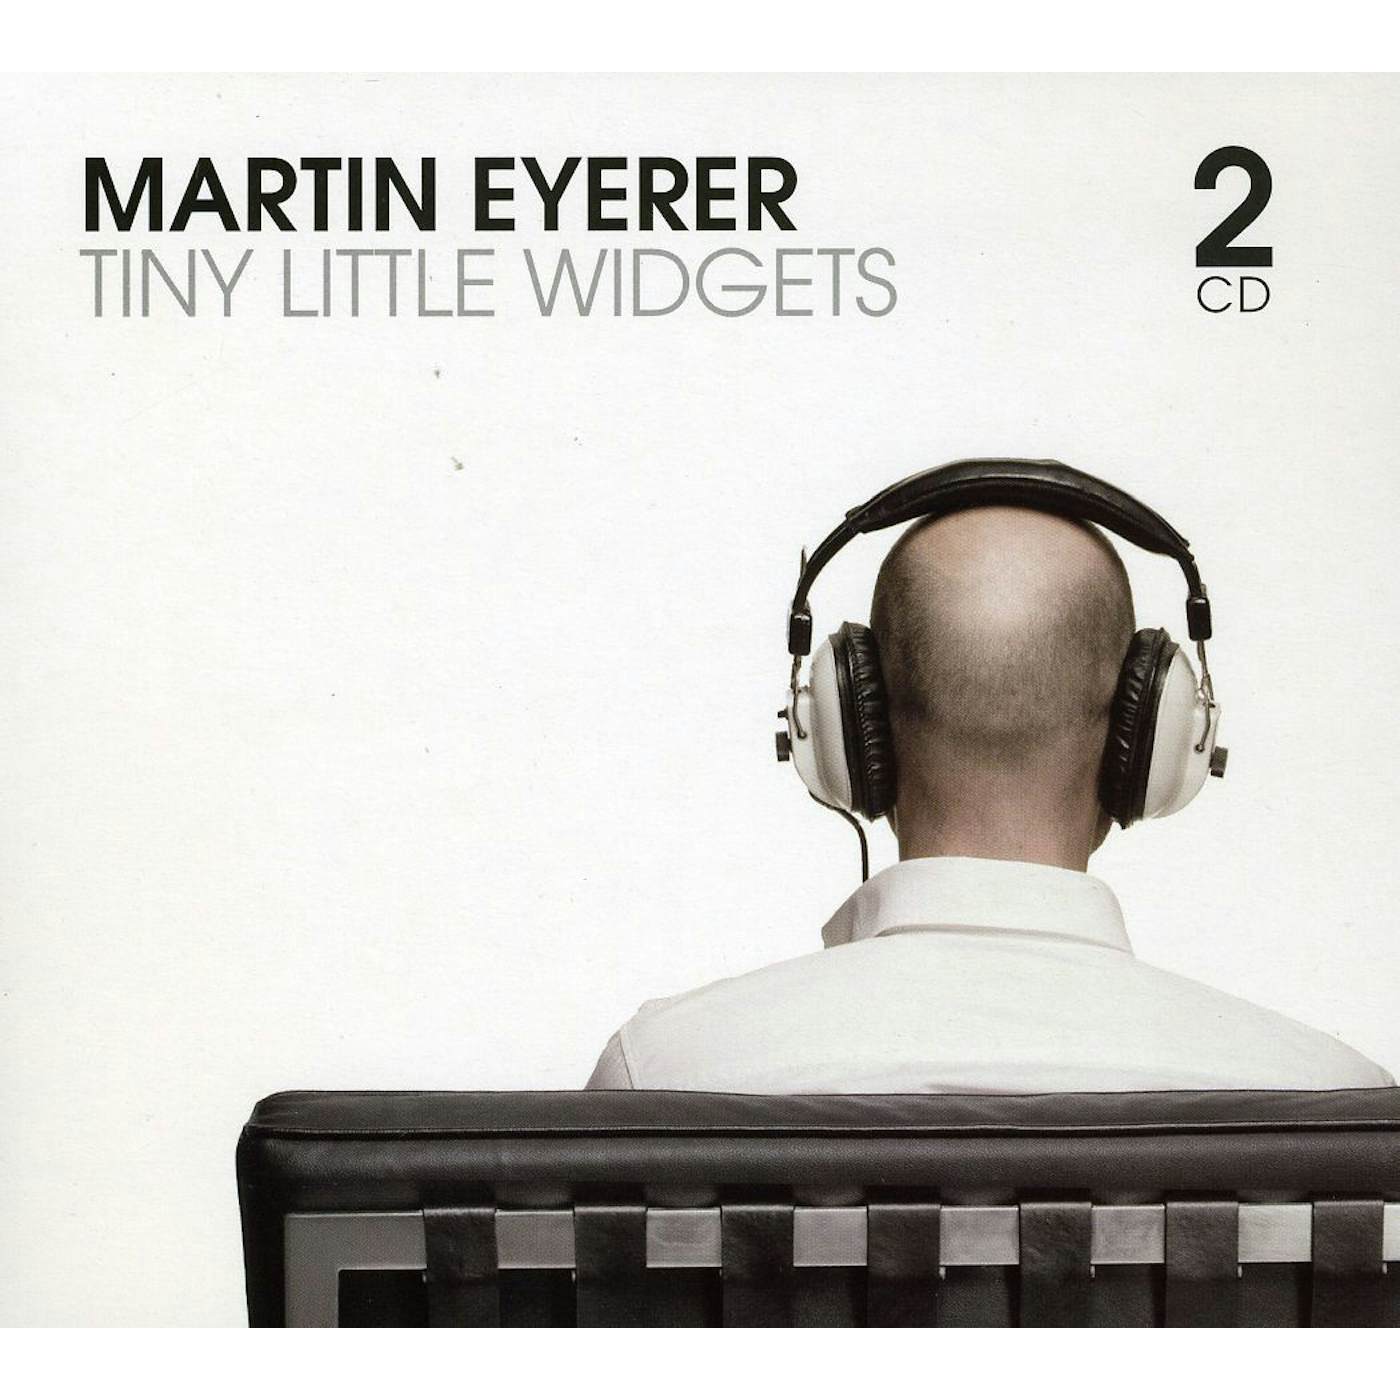 Martin Eyerer TINY LITTLE WIDGETS CD